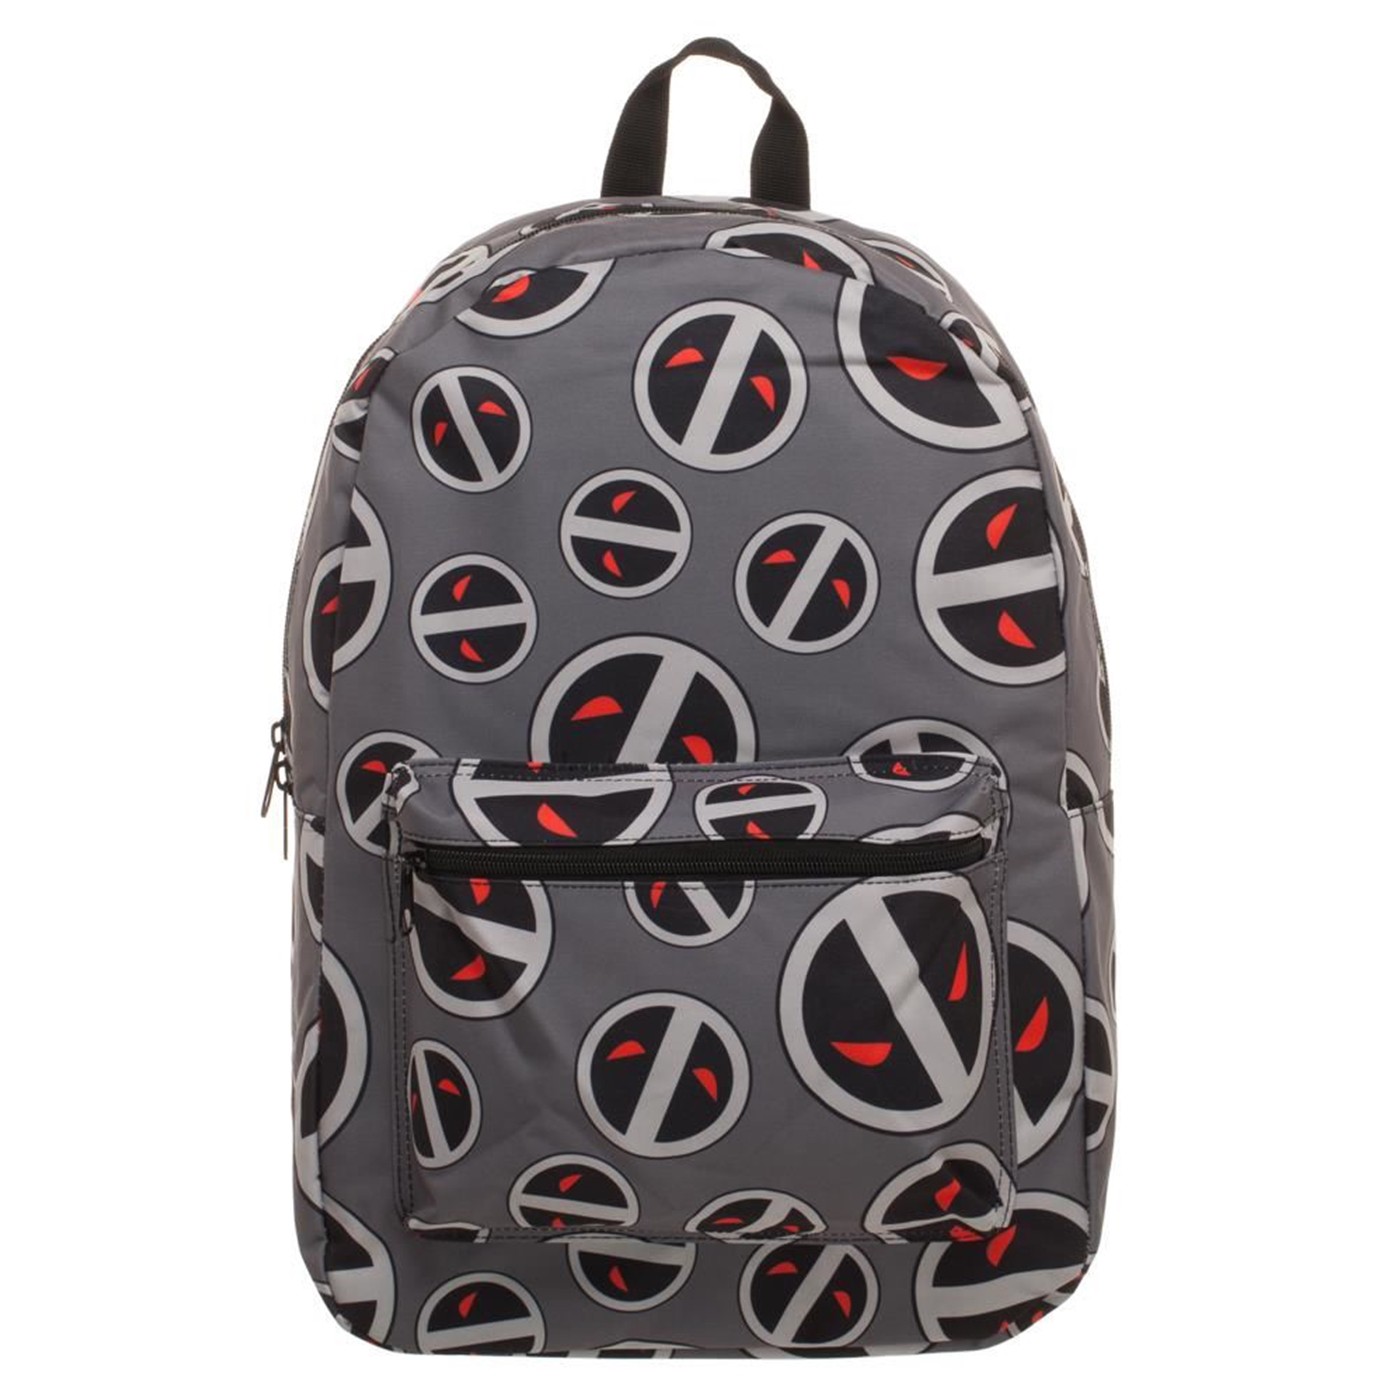 Deadpool Task Force X Backpack